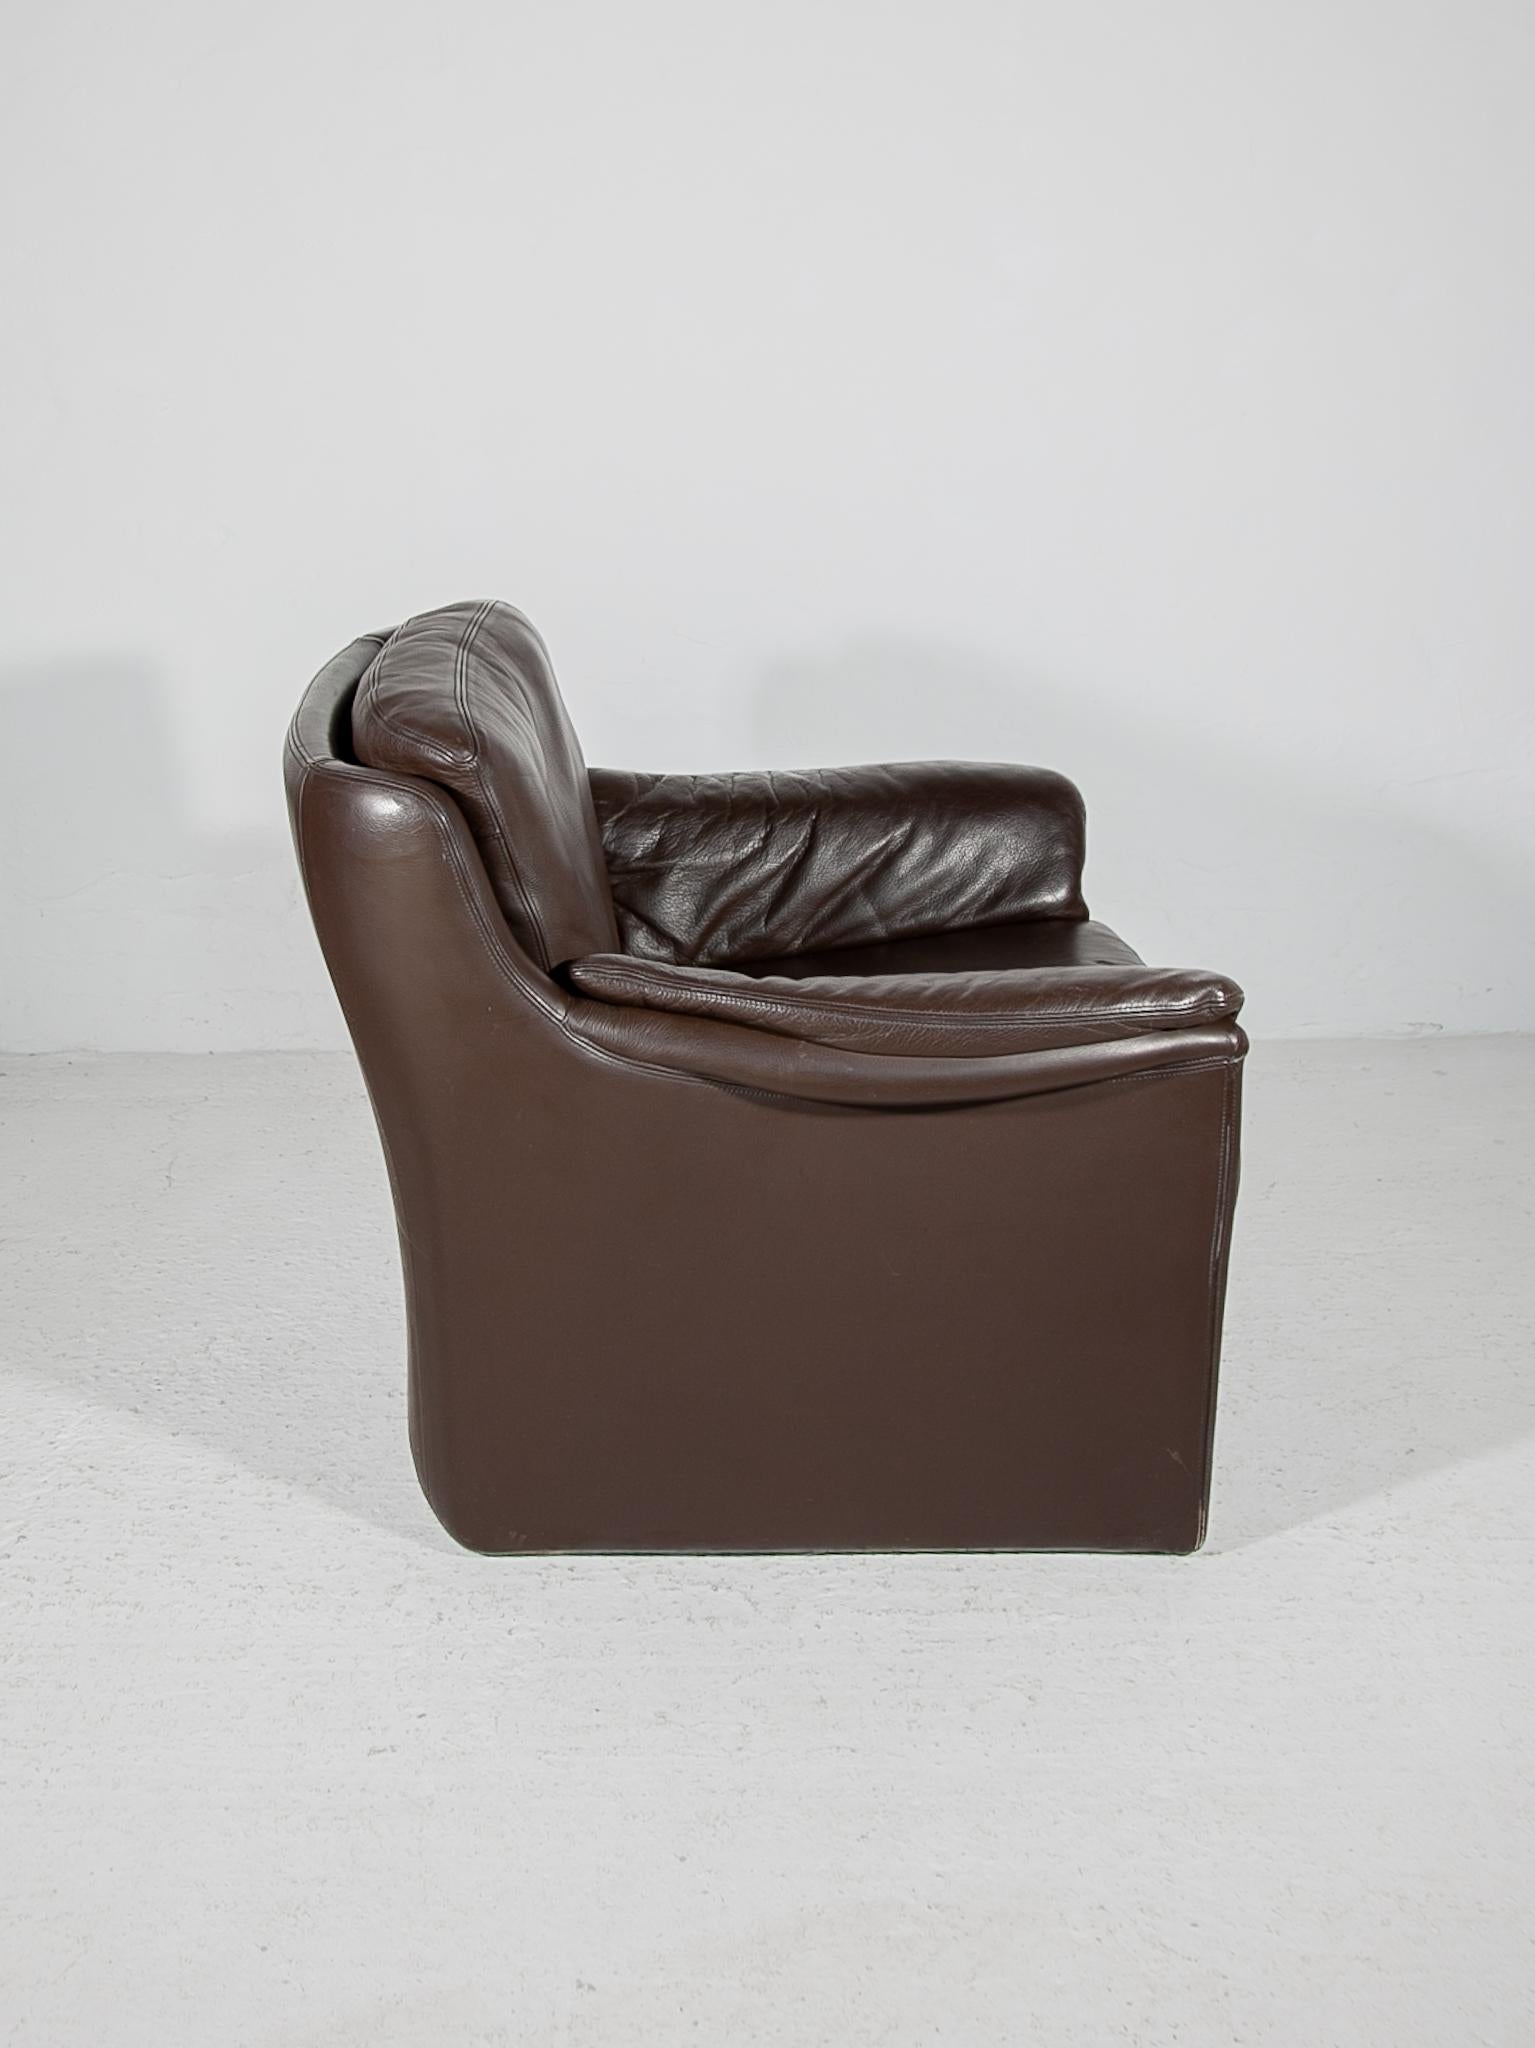  Durlet Lounge Chair, Buffolo Braunes Leder, 1970er Jahre (Moderne der Mitte des Jahrhunderts) im Angebot